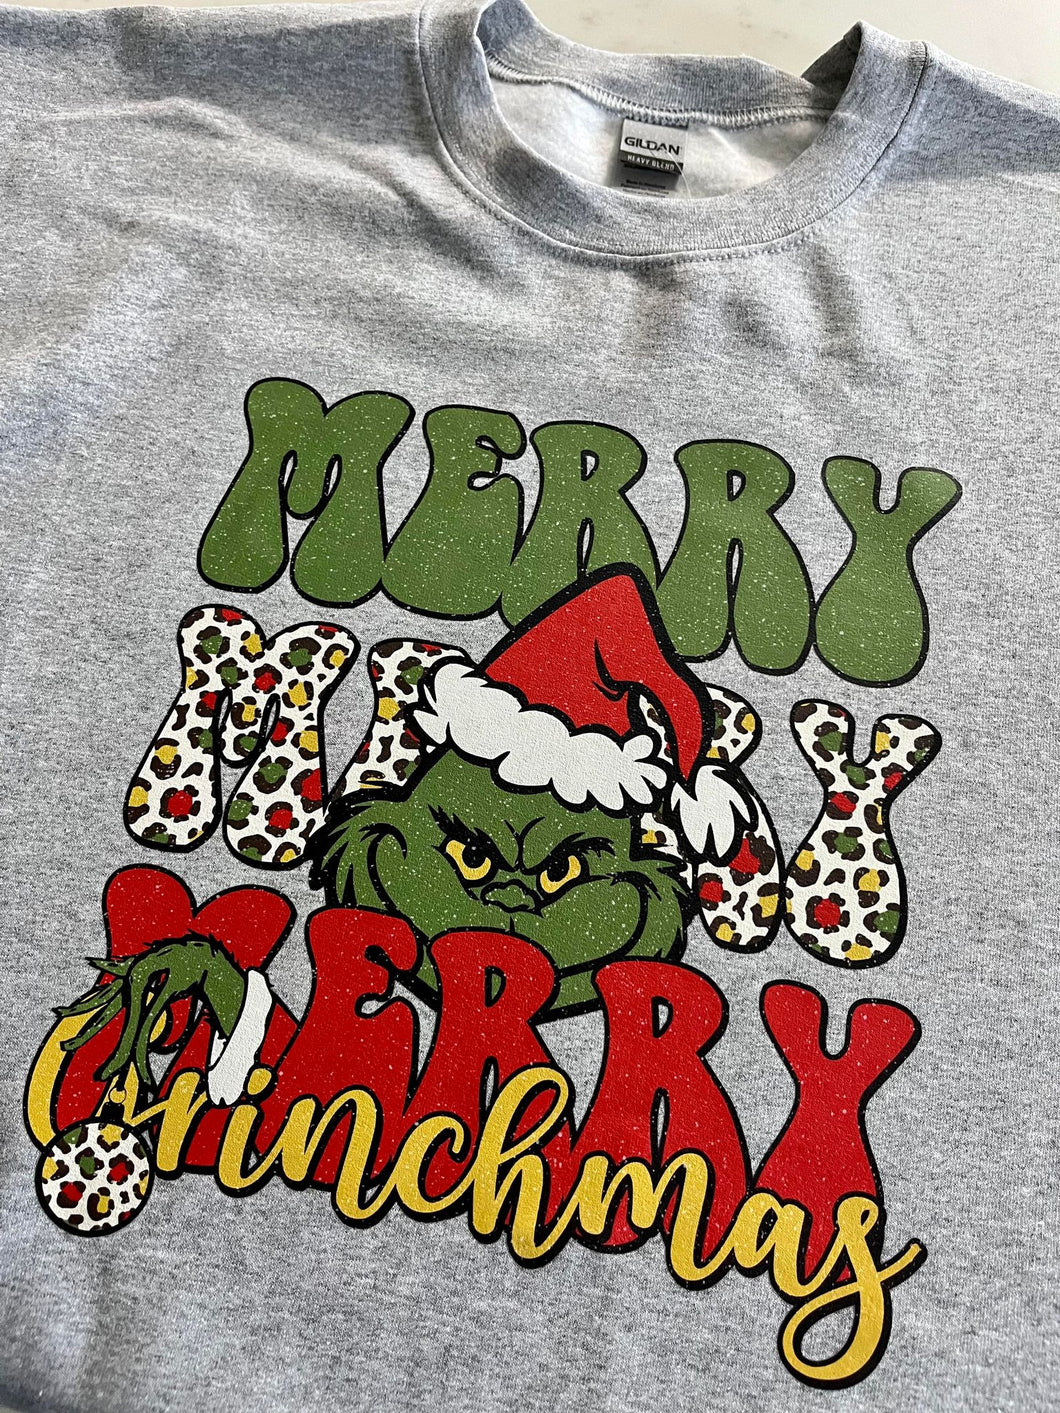 Merry Merry Merry Grinchmas